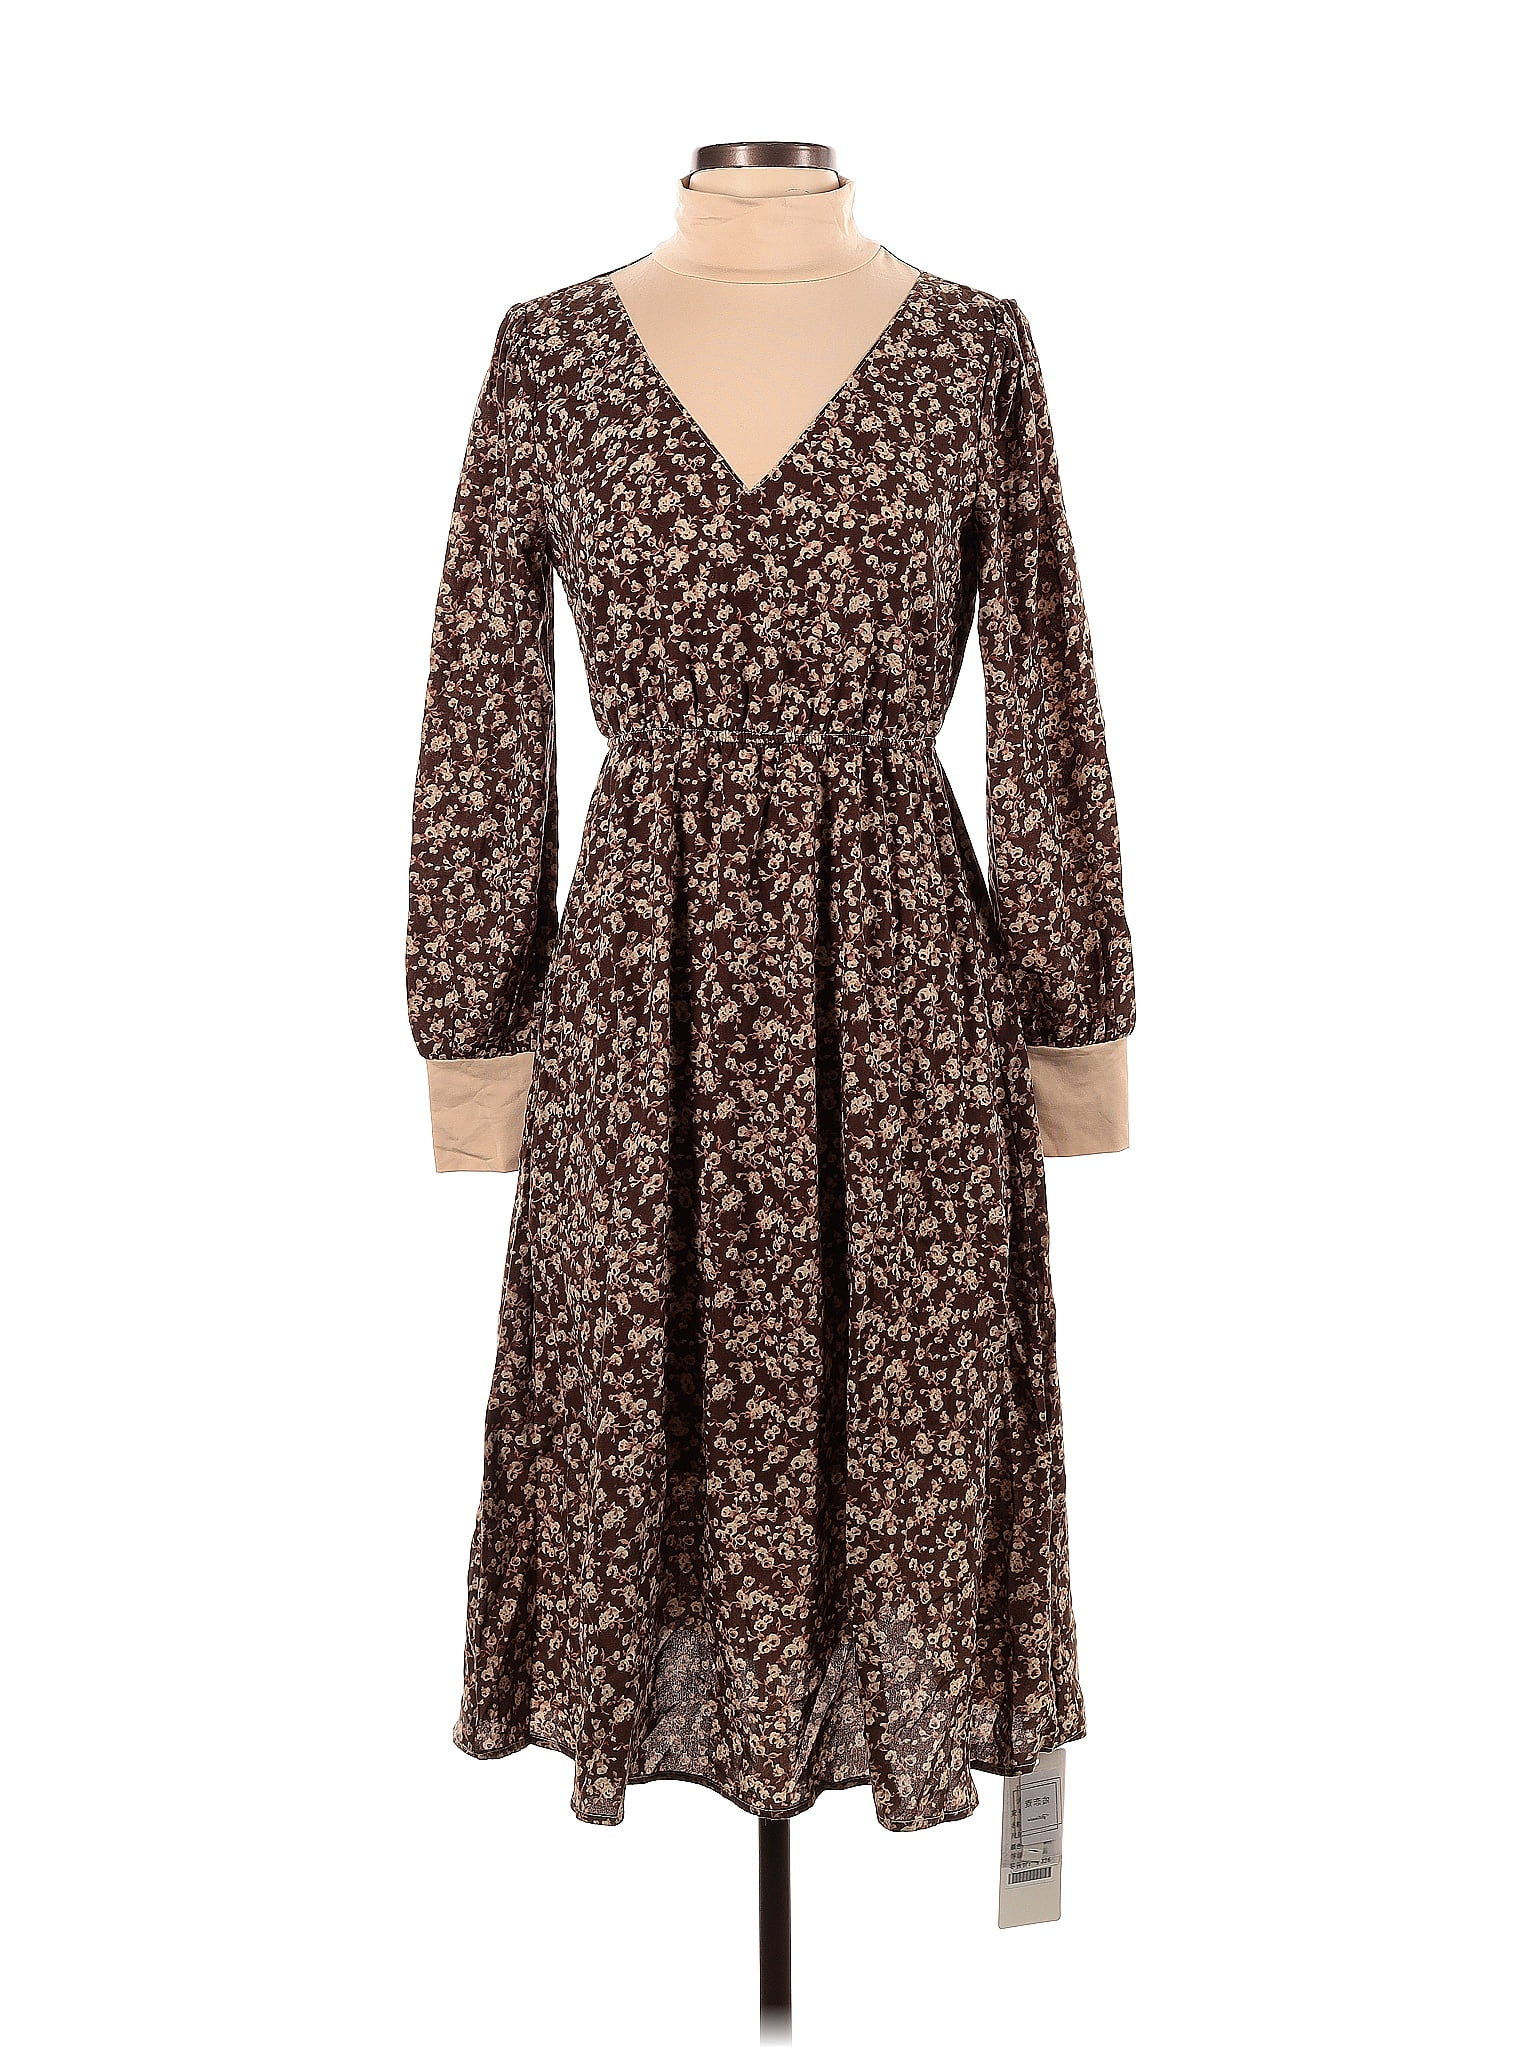 Unbranded Floral Multi Color Brown Casual Dress Size M - 49% off | thredUP